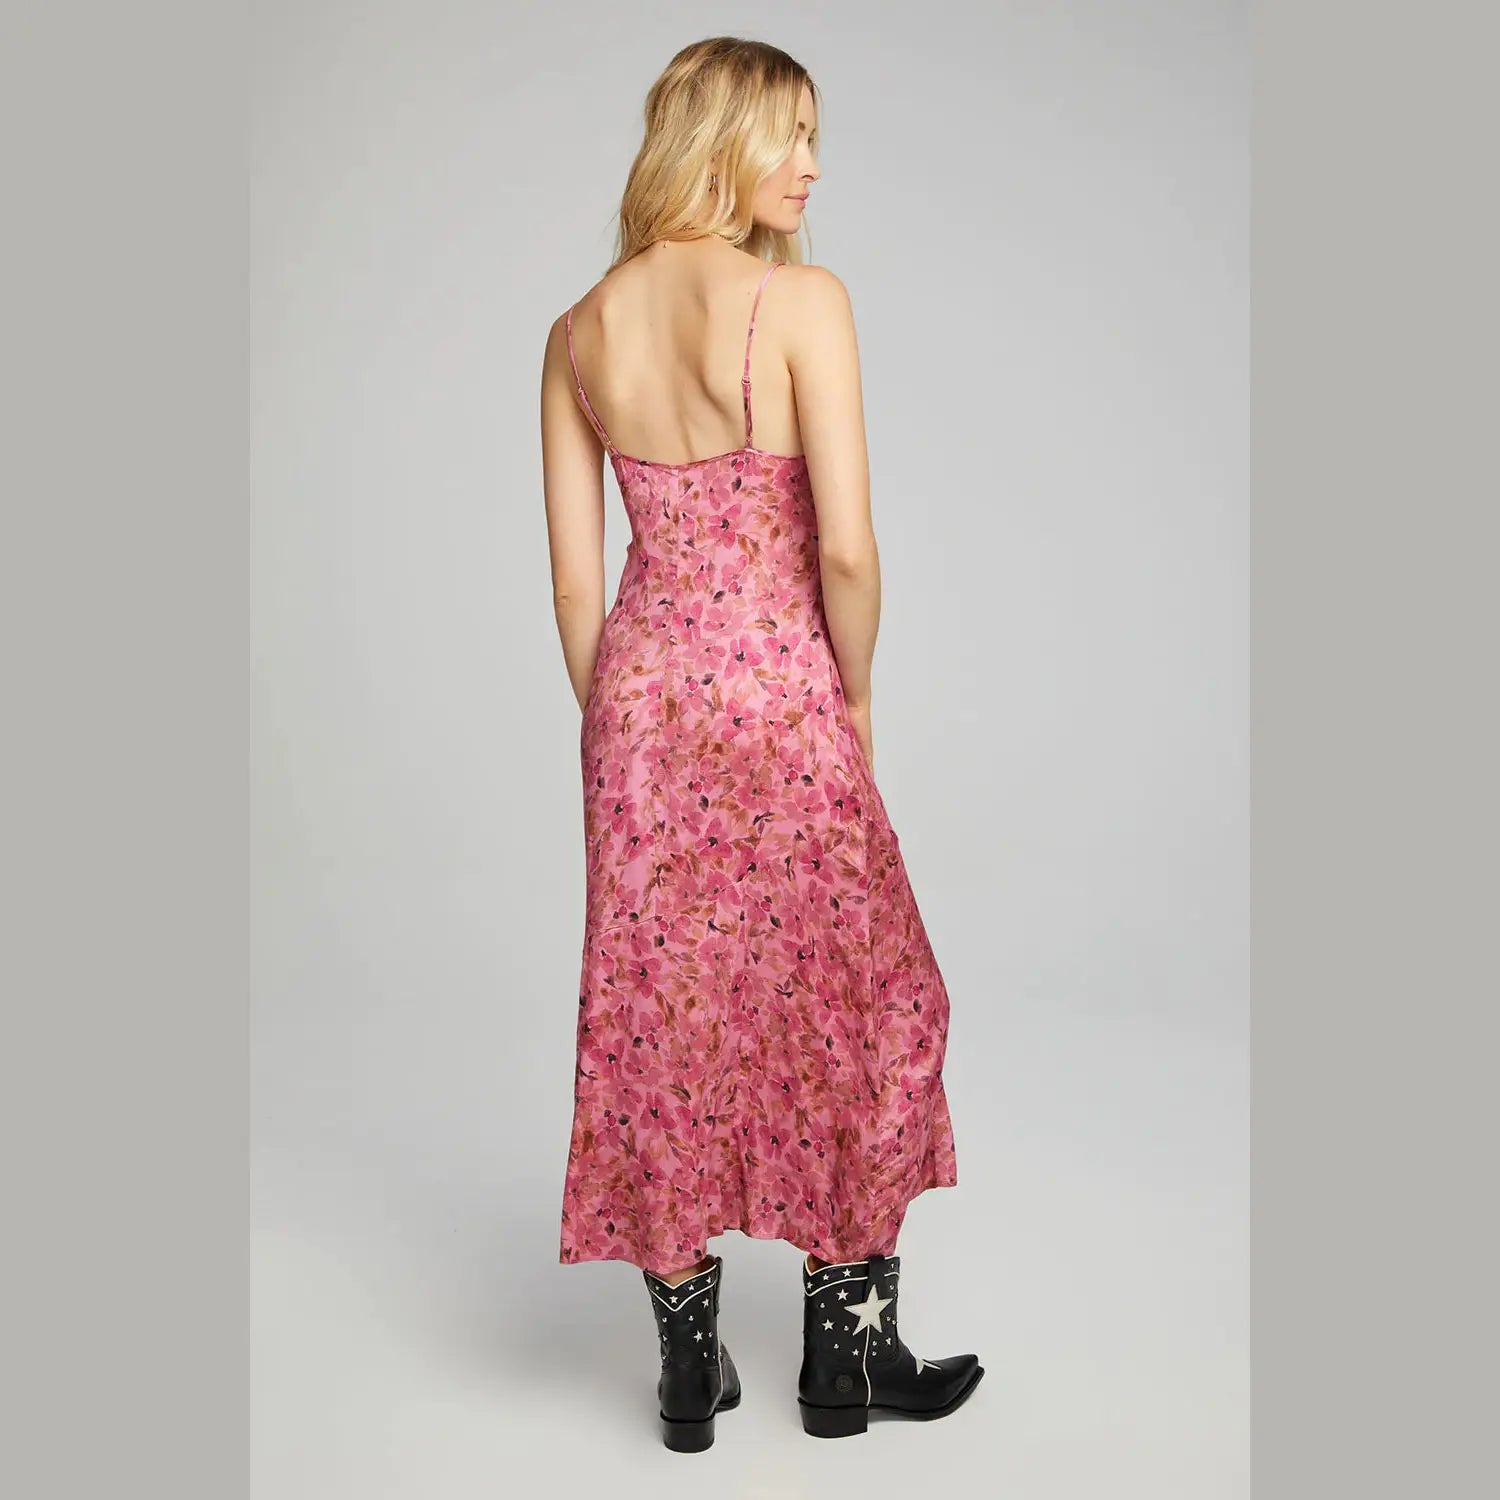 Saltwater Luxe SHARICE Hot Pink Midi Tank Dress